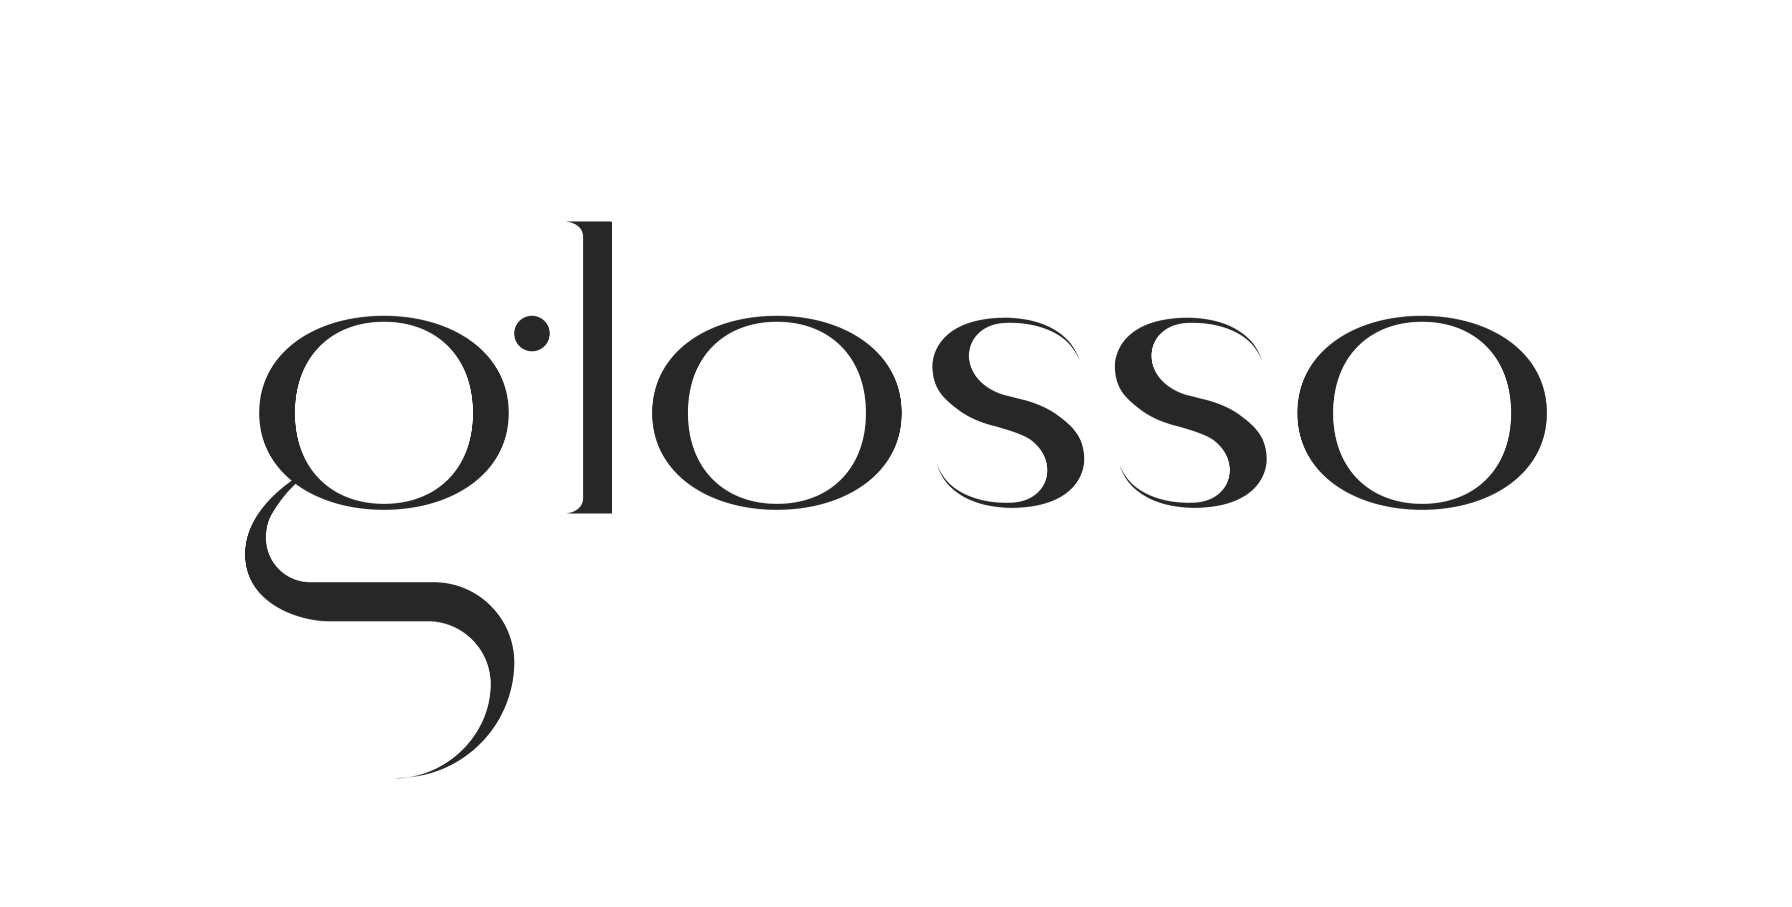 Glosso